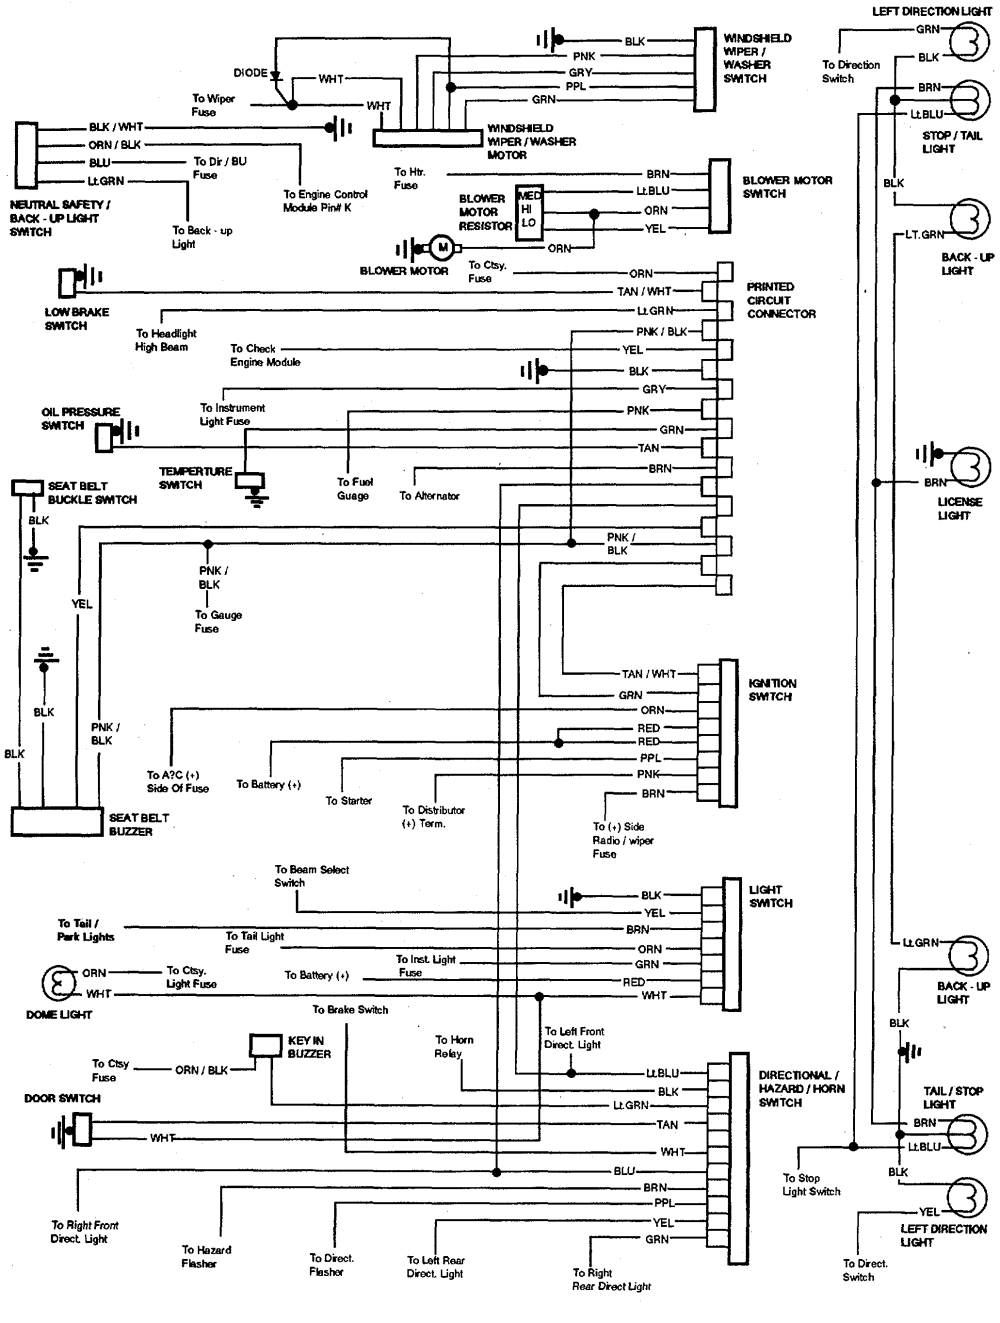 1980 Monte Carlo Wiring Diagram | Online Wiring Diagram